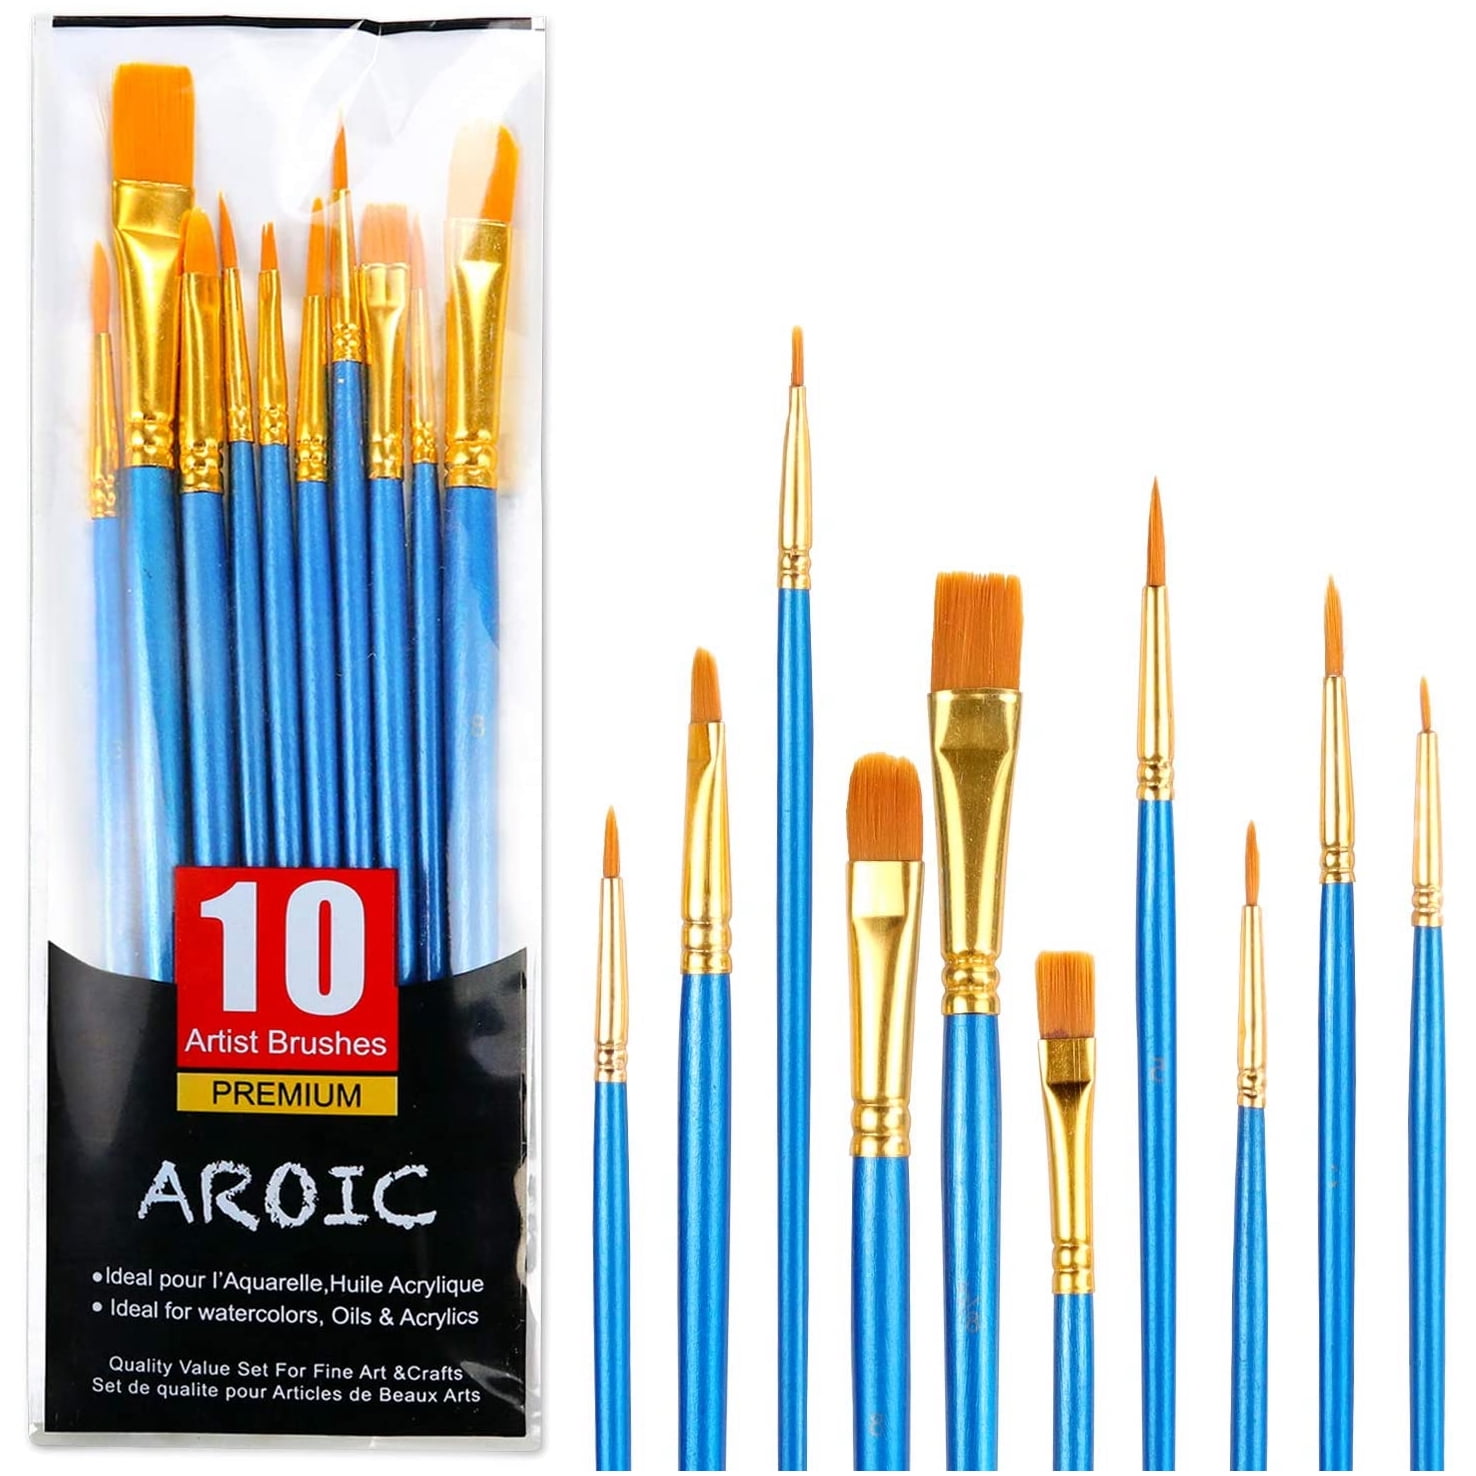 Generic Paint Brushes Set, 400Pcs Nylon Hair Brushes for Acrylic @ Best  Price Online